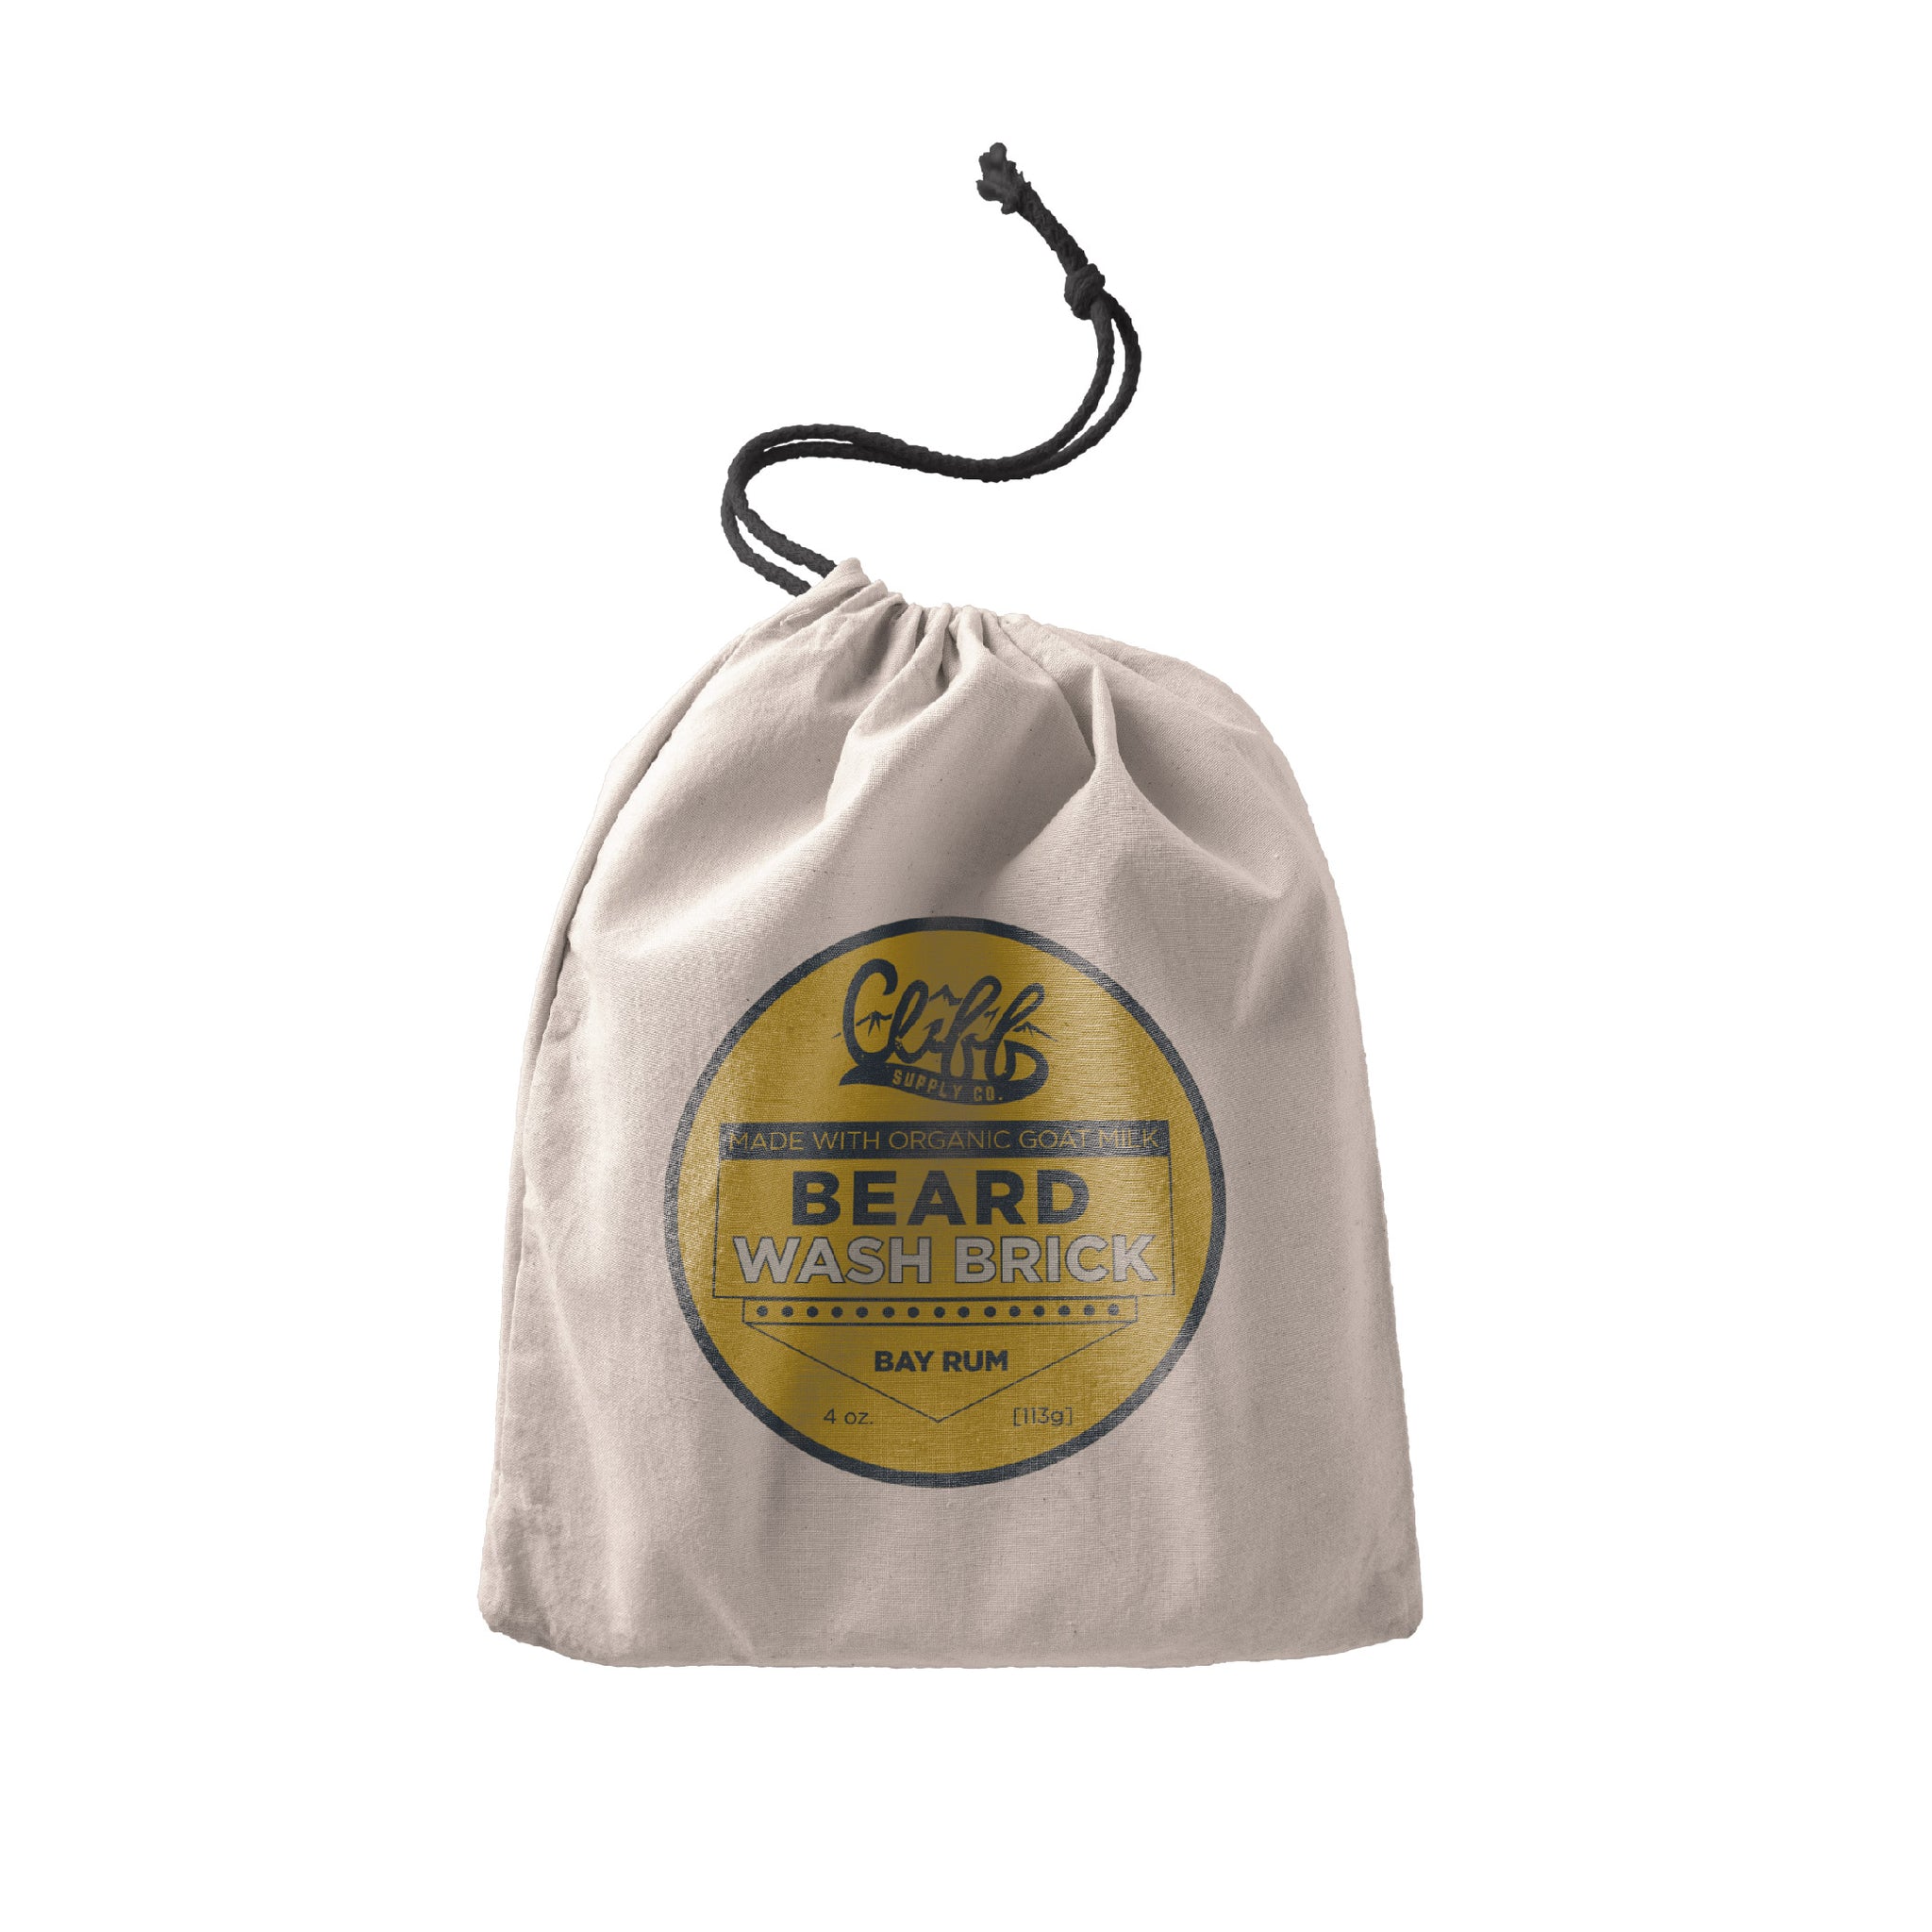 Beard Wash Brick - Bay Rum (1 unit)